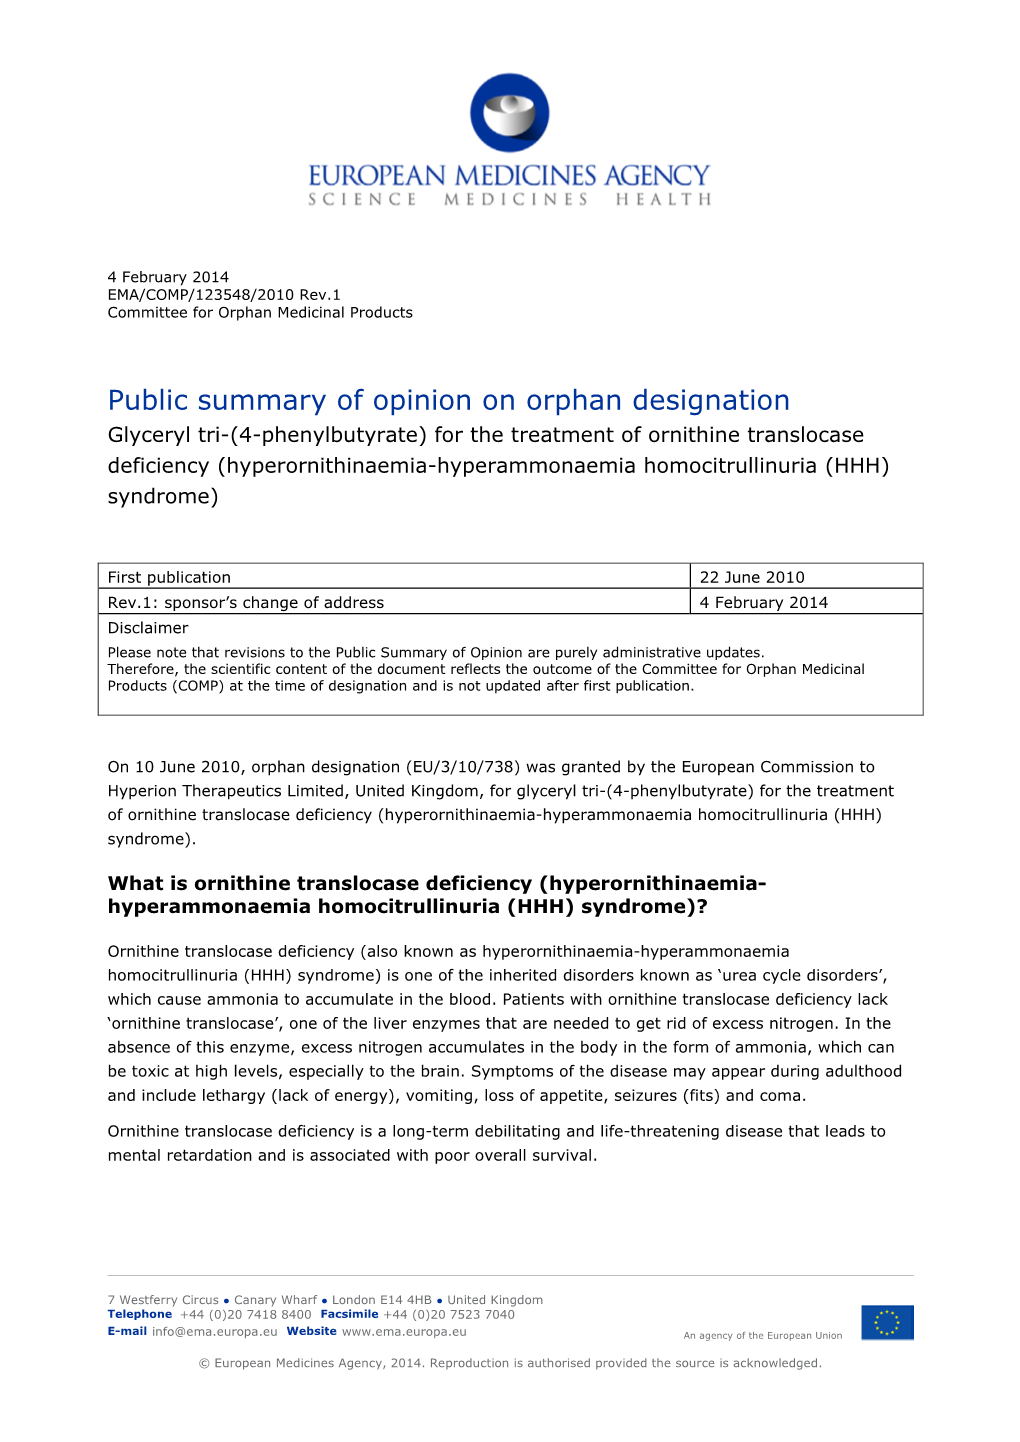 Public Summary of Opinion on Orphan